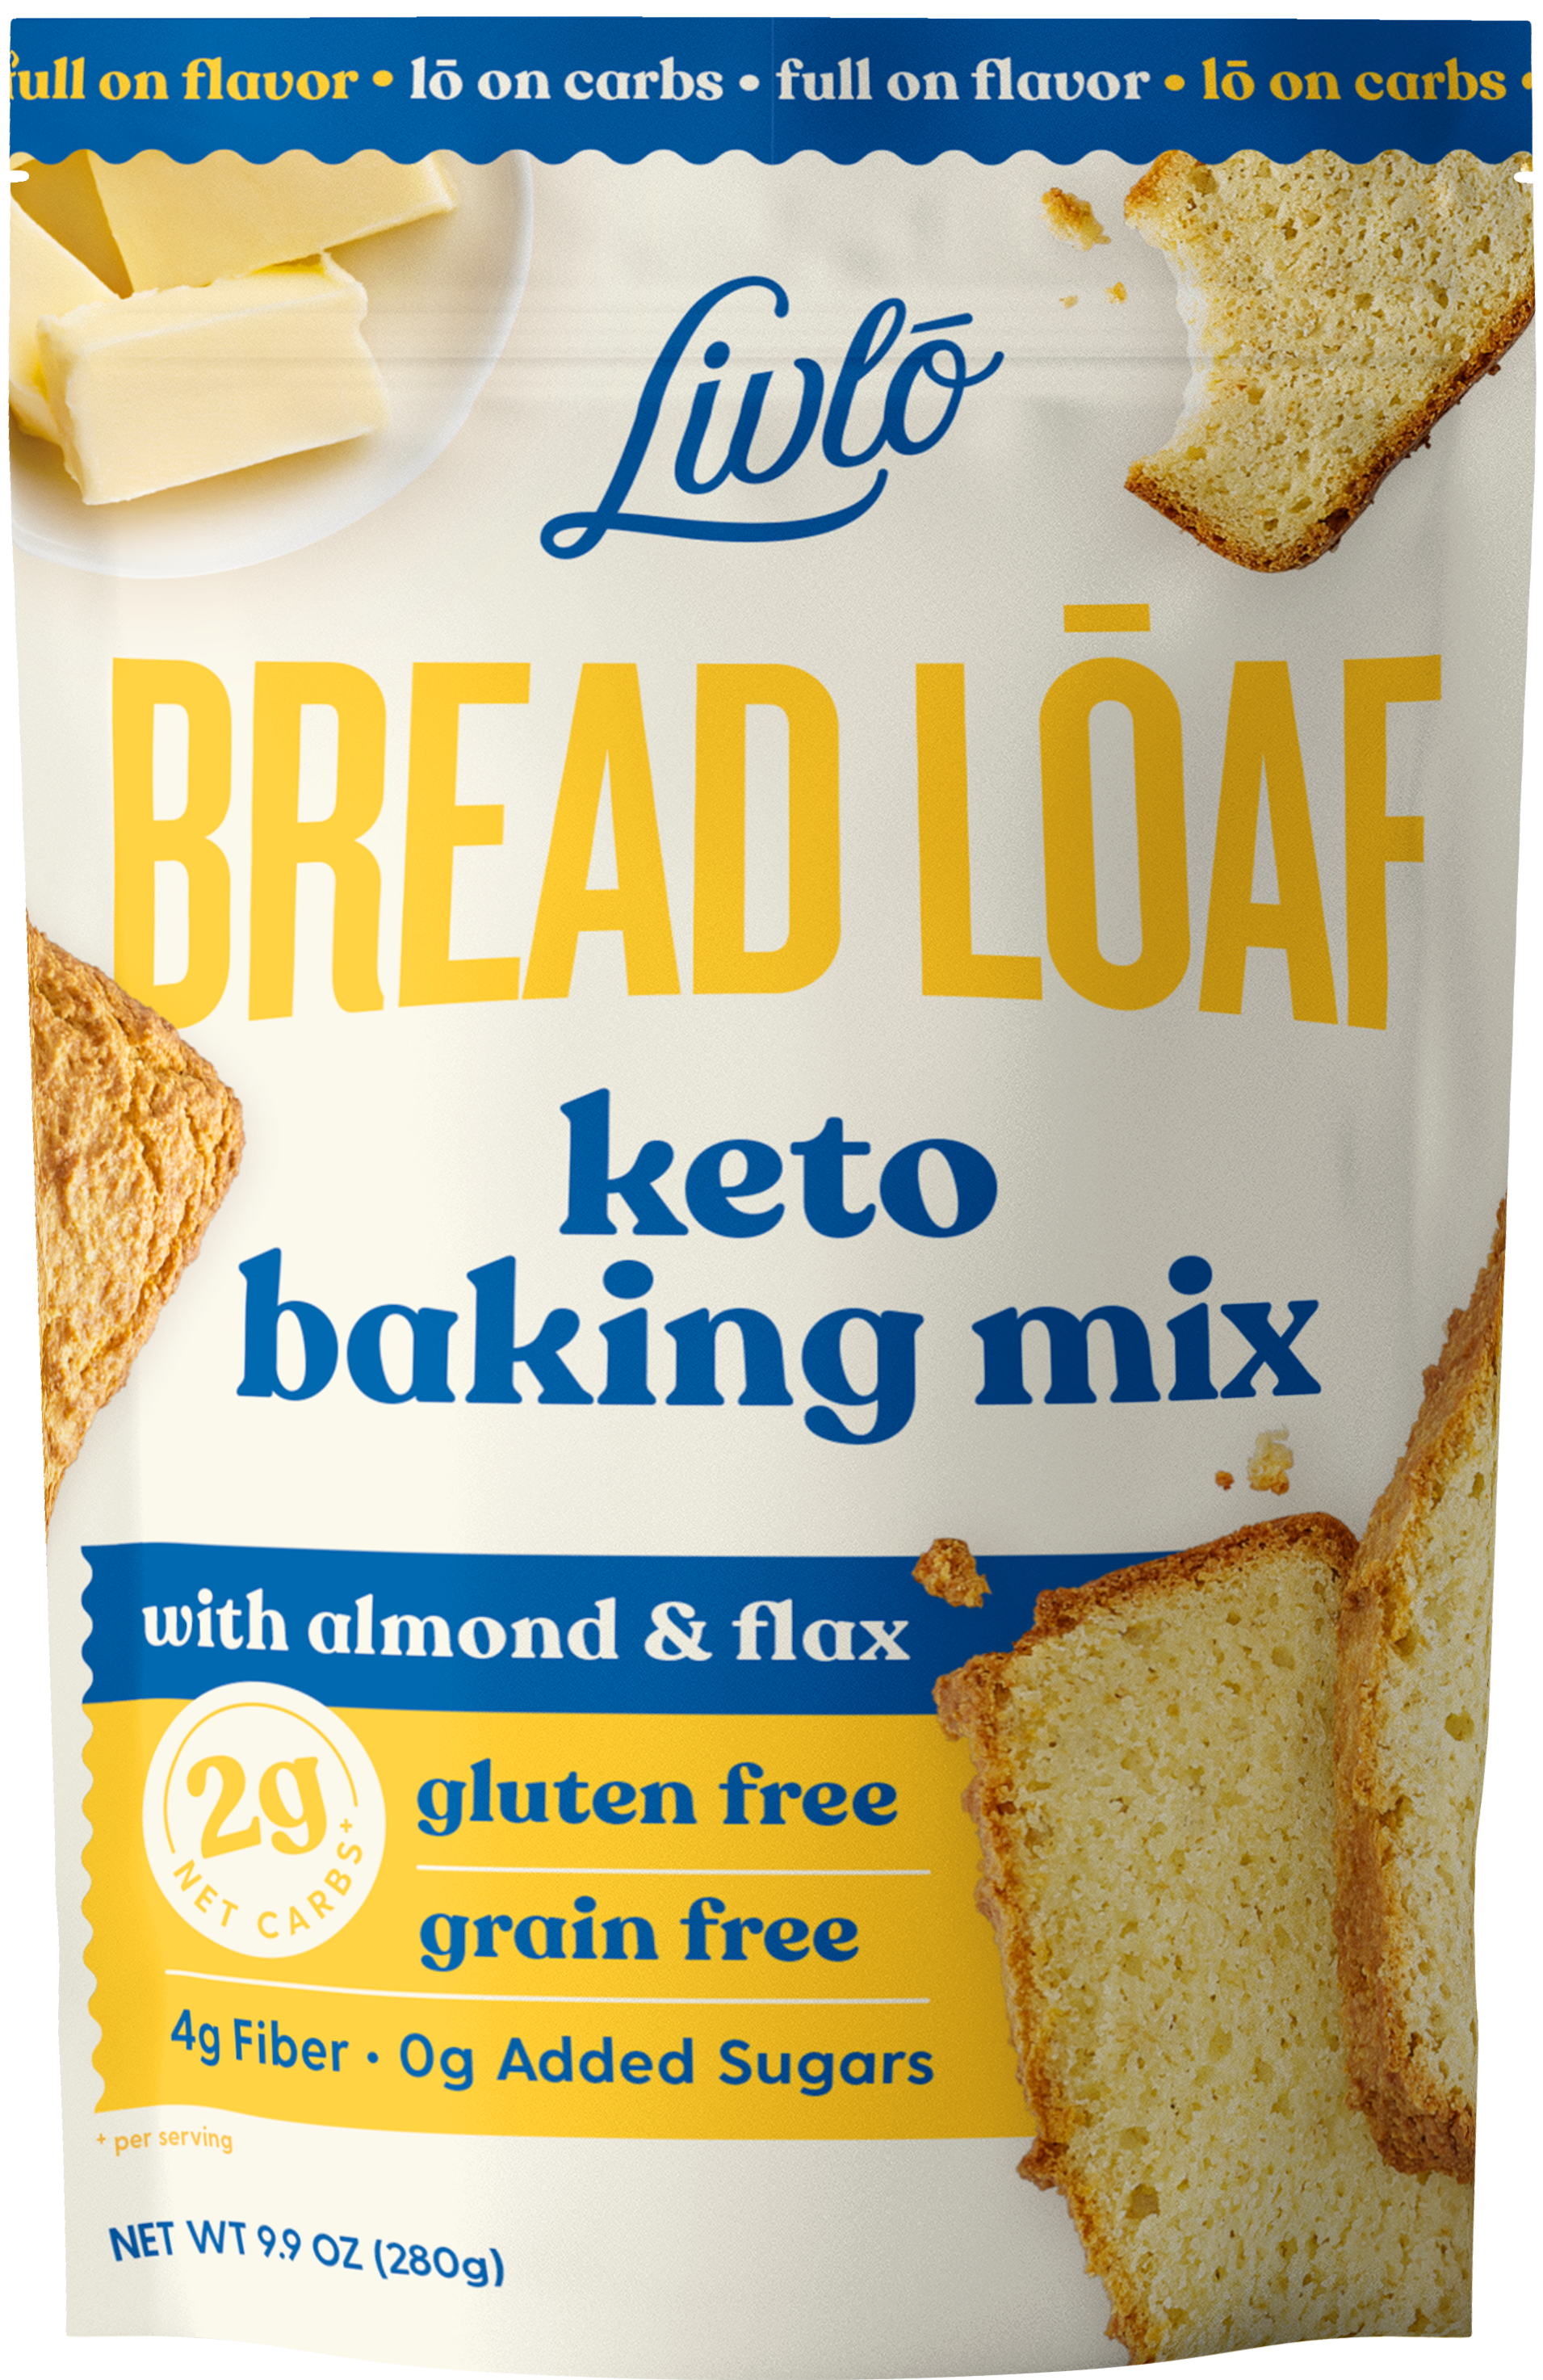 Bread loaf keto baking mix